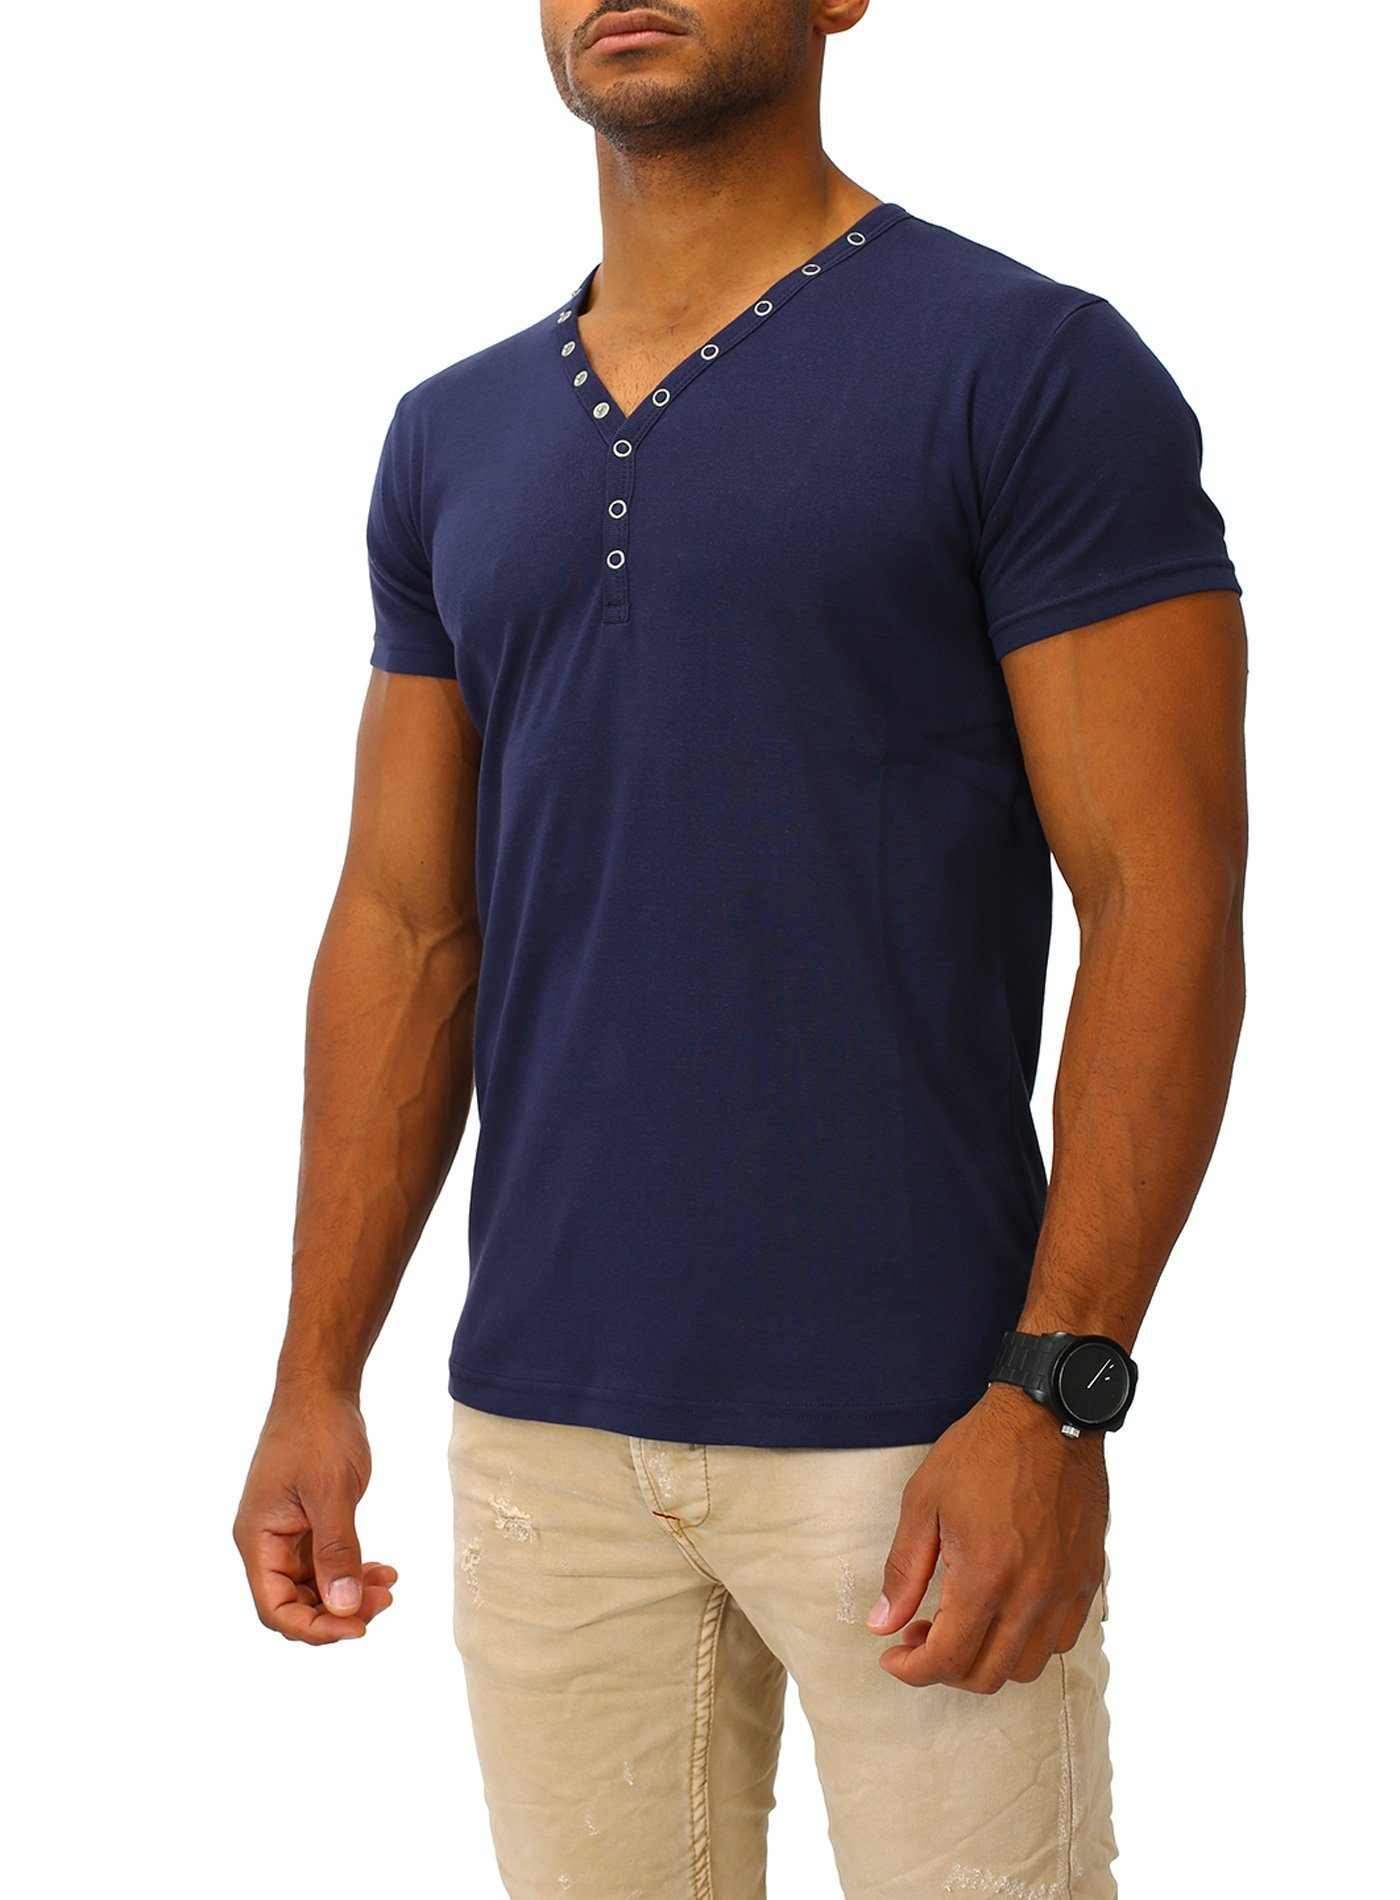 Joe Franks T-Shirt SMALL BUTTON in stylischem Slim Fit, Kurzarm Druckknopf navy